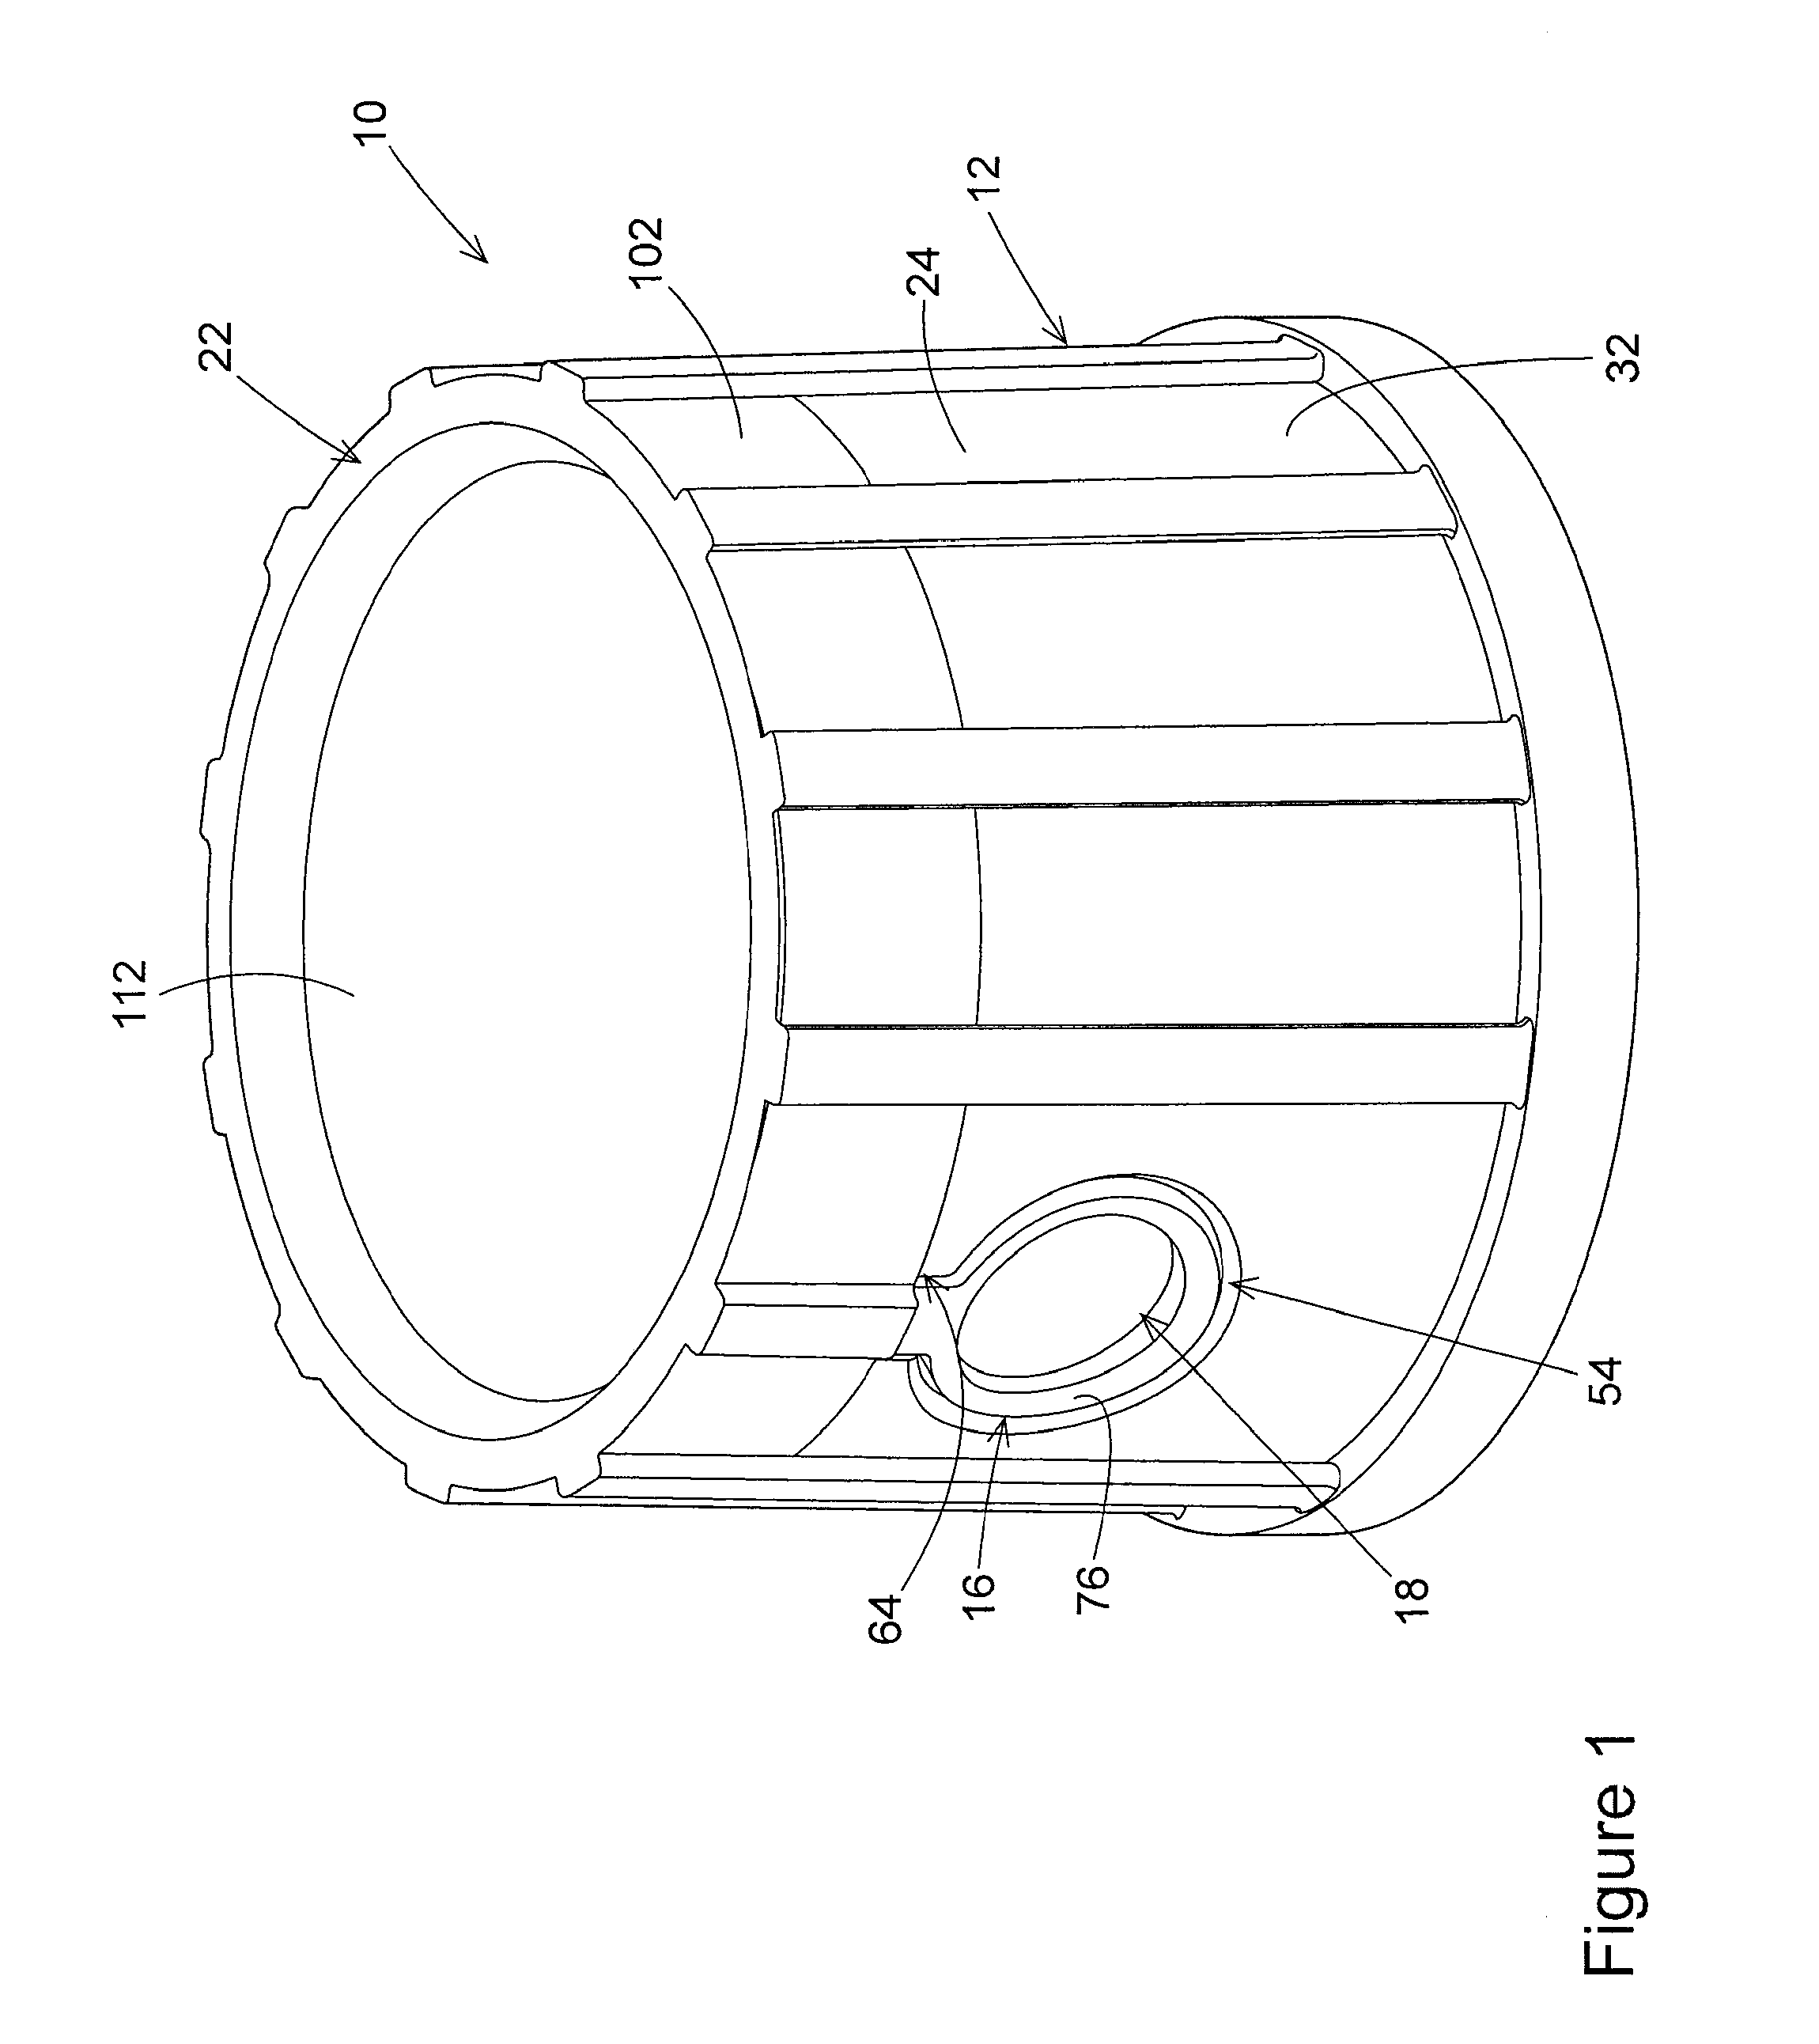 Rotational Dispensing Cap Closure for a Liquid Container